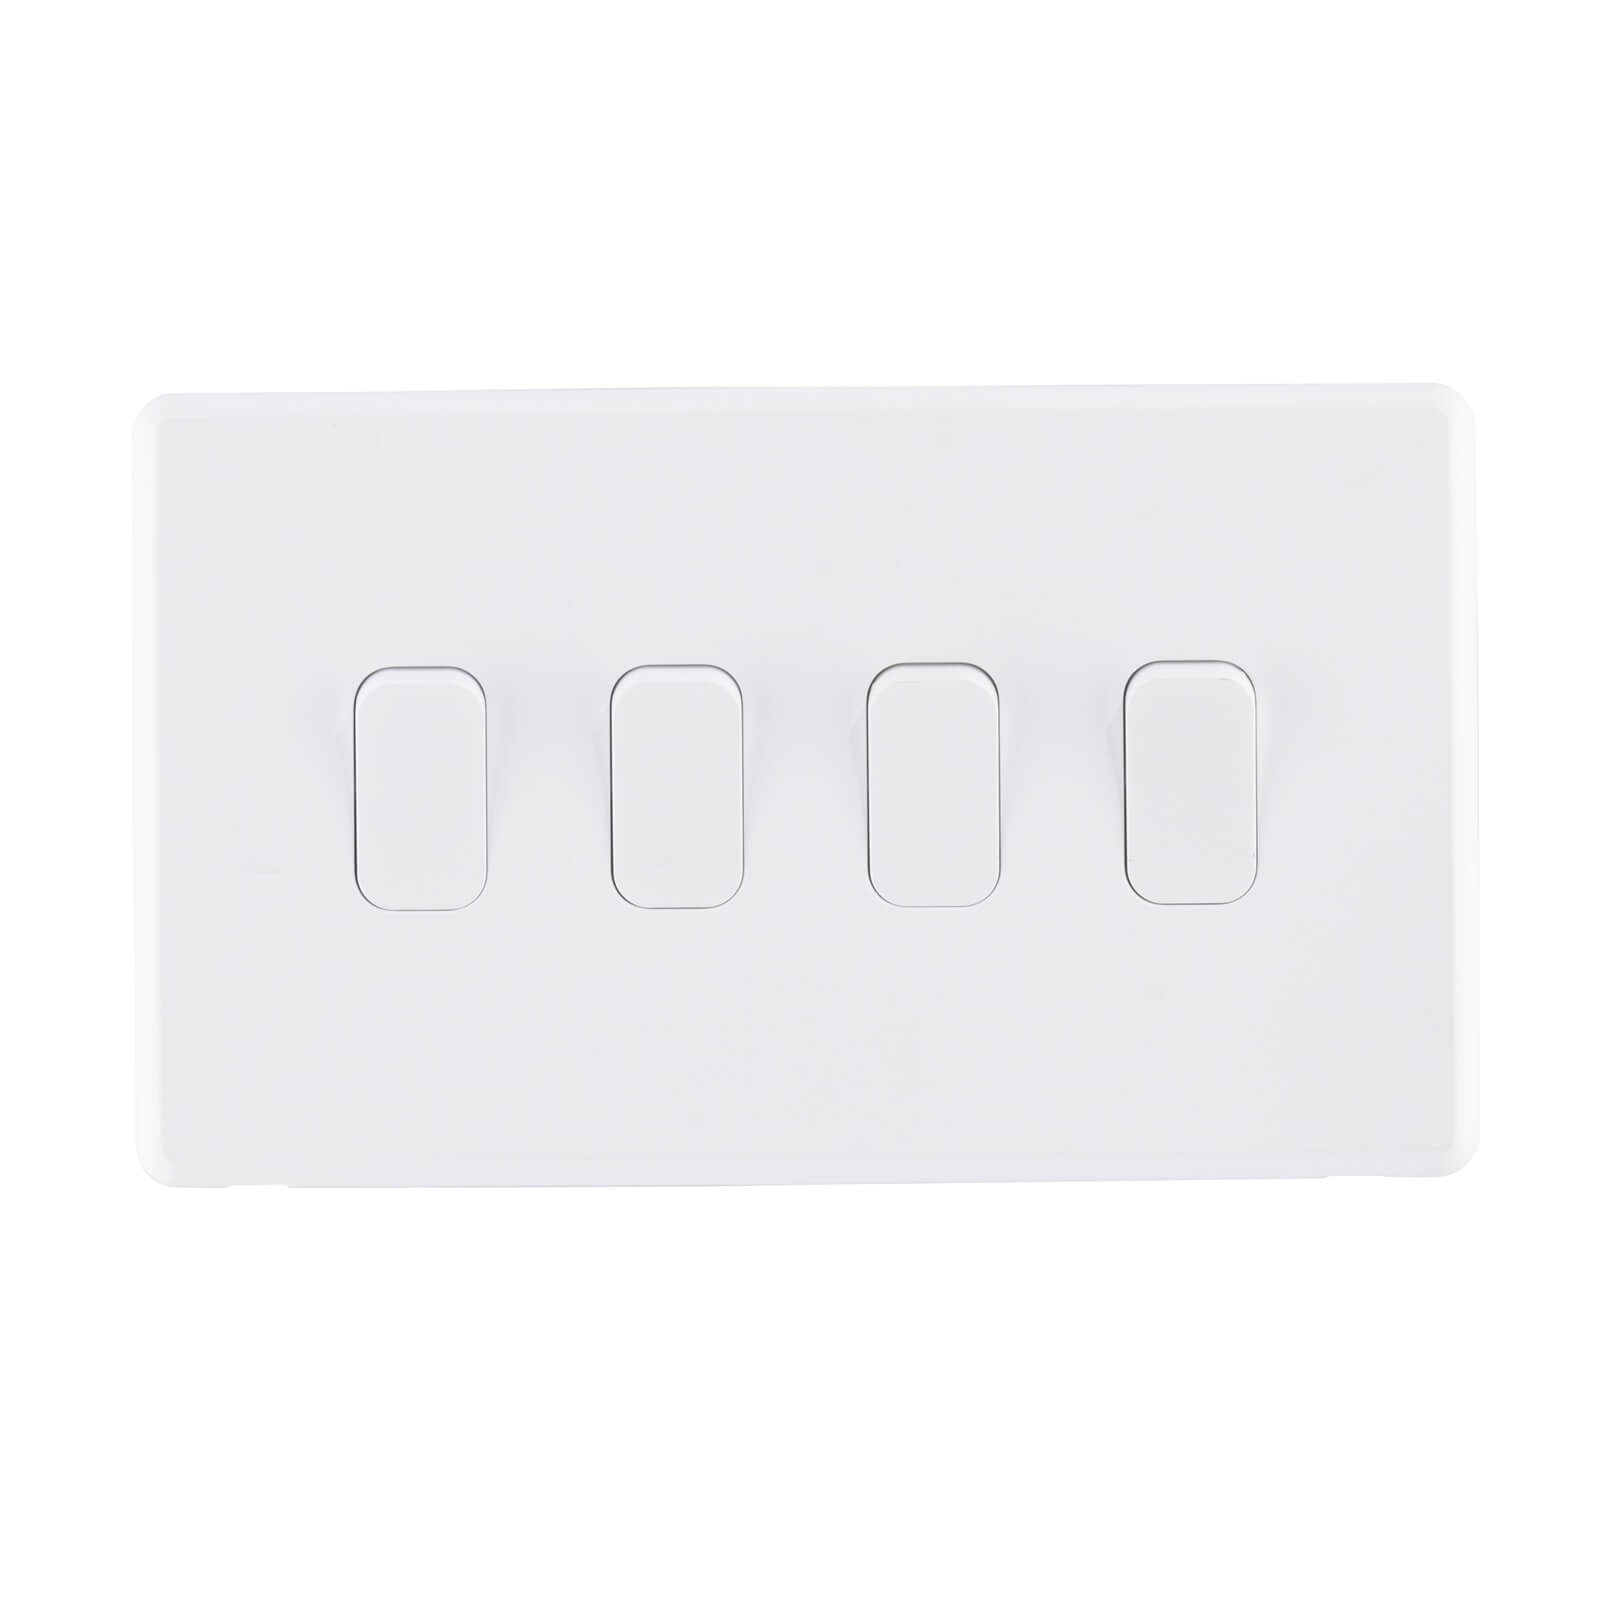 Arlec Rocker 10A 4Gang 2Way Ice White Quadruple light switch